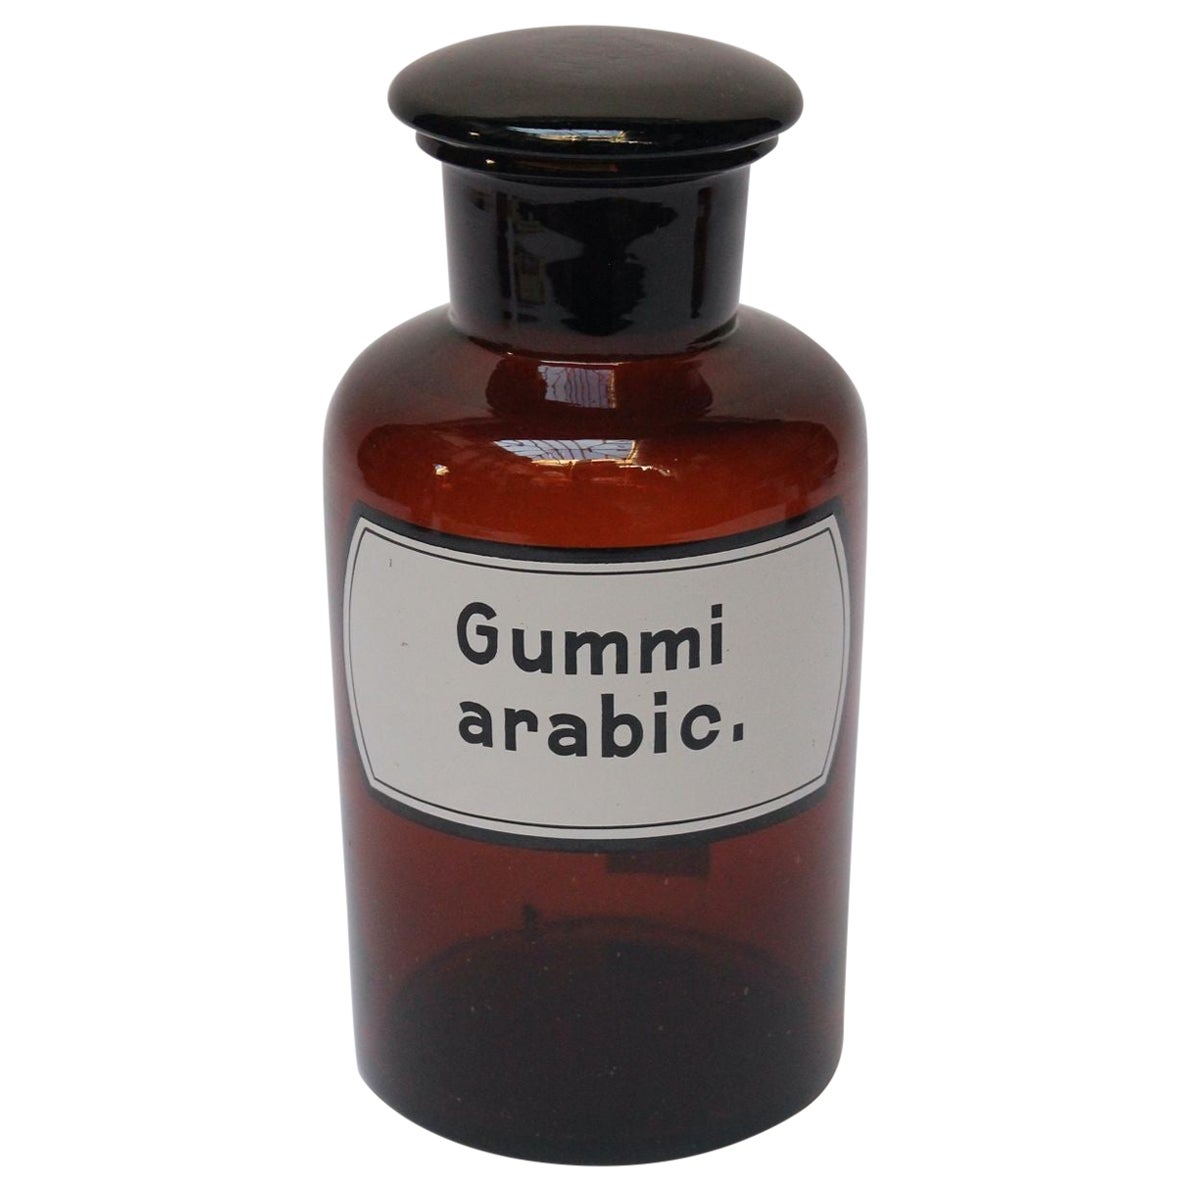 Vintage German Amber Glass "Gummi Arabicum" Apothecary Bottle